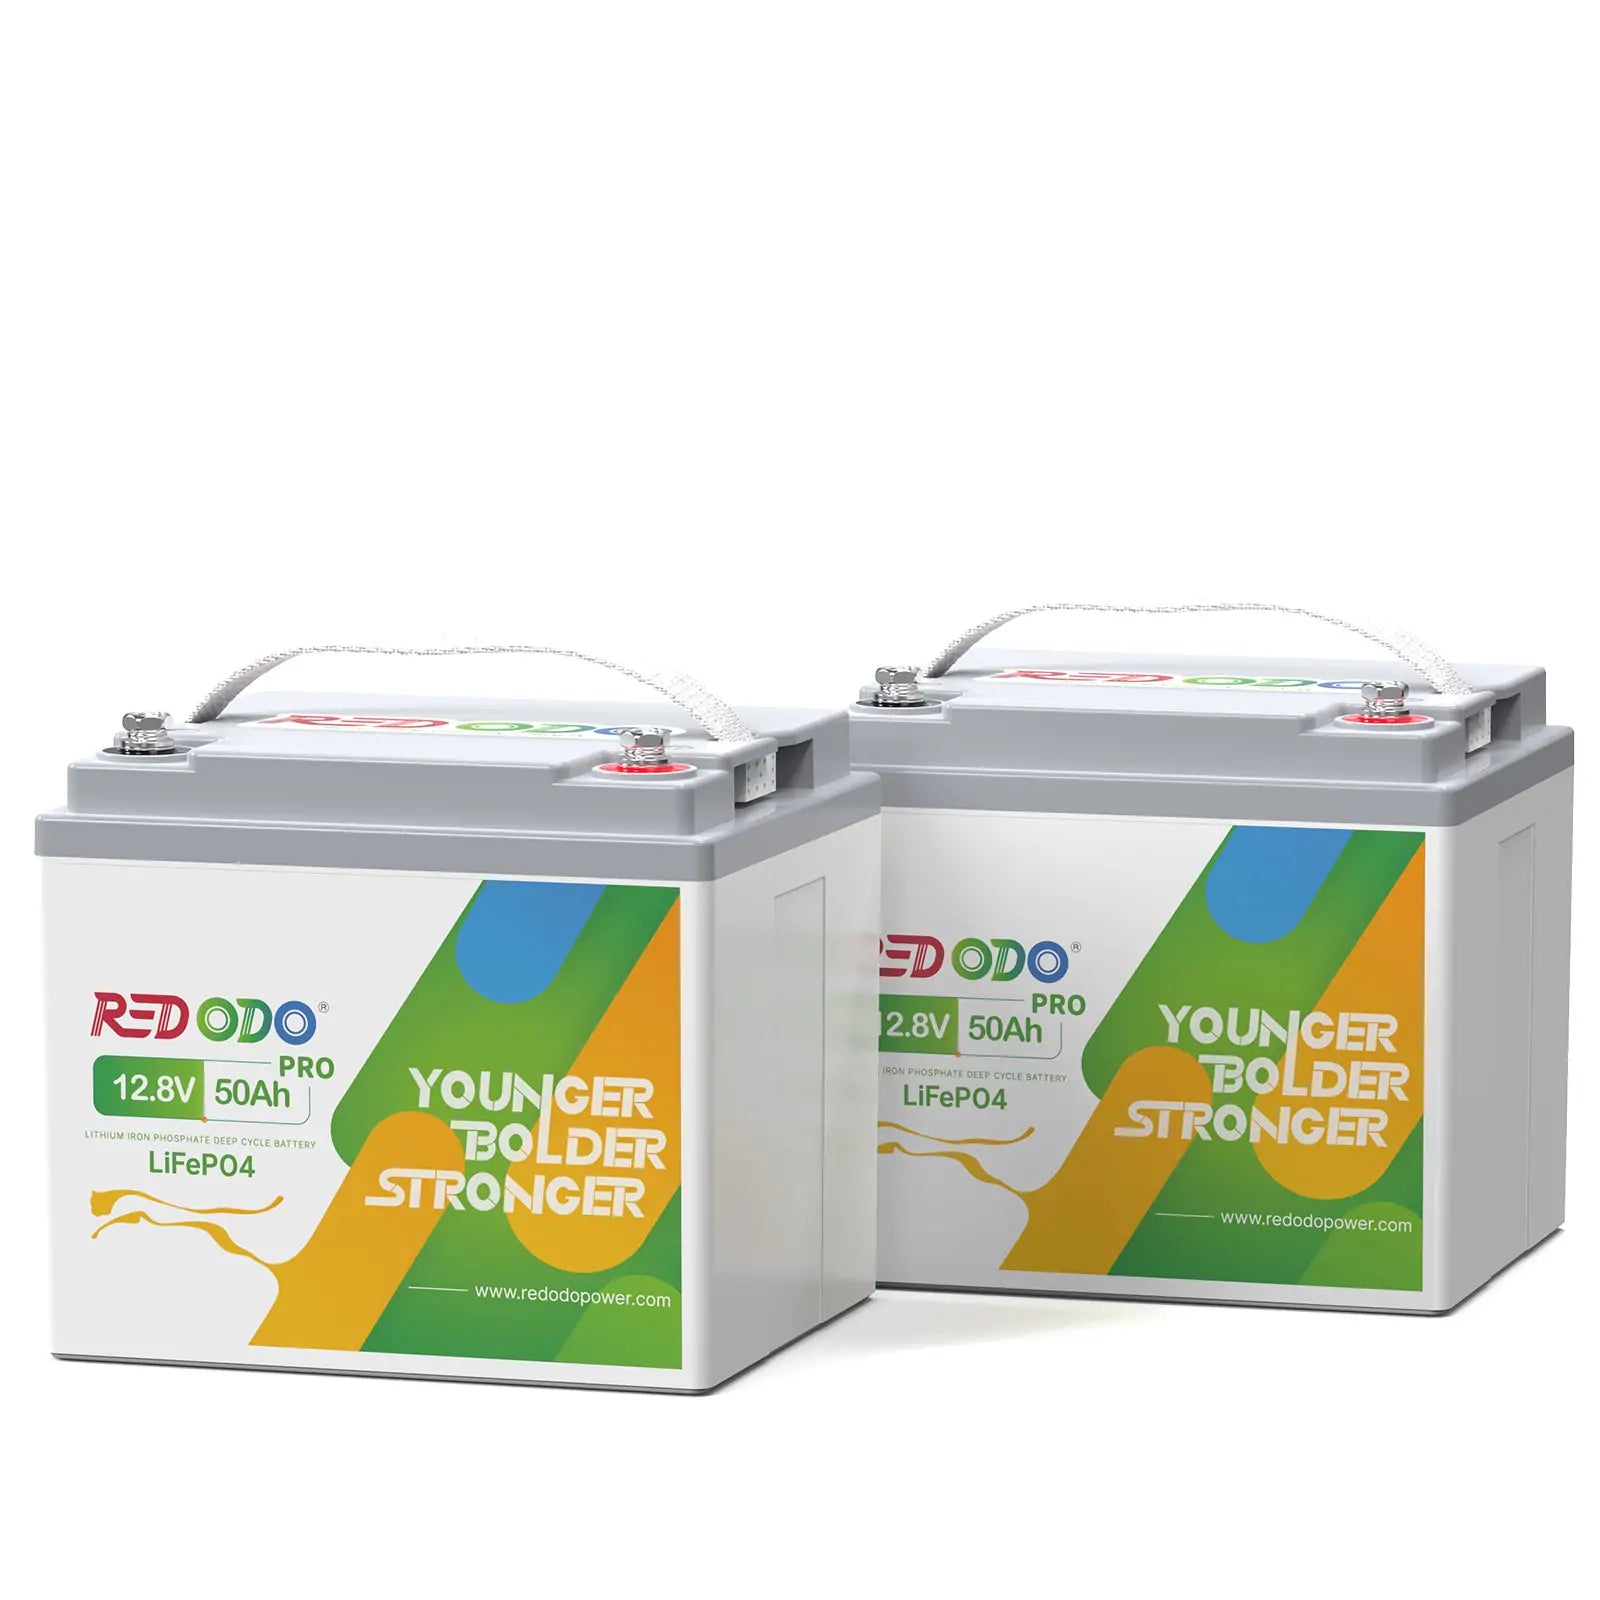 Redodo 12V 50Ah Pro LiFePO4 Battery | 640Wh & 640W